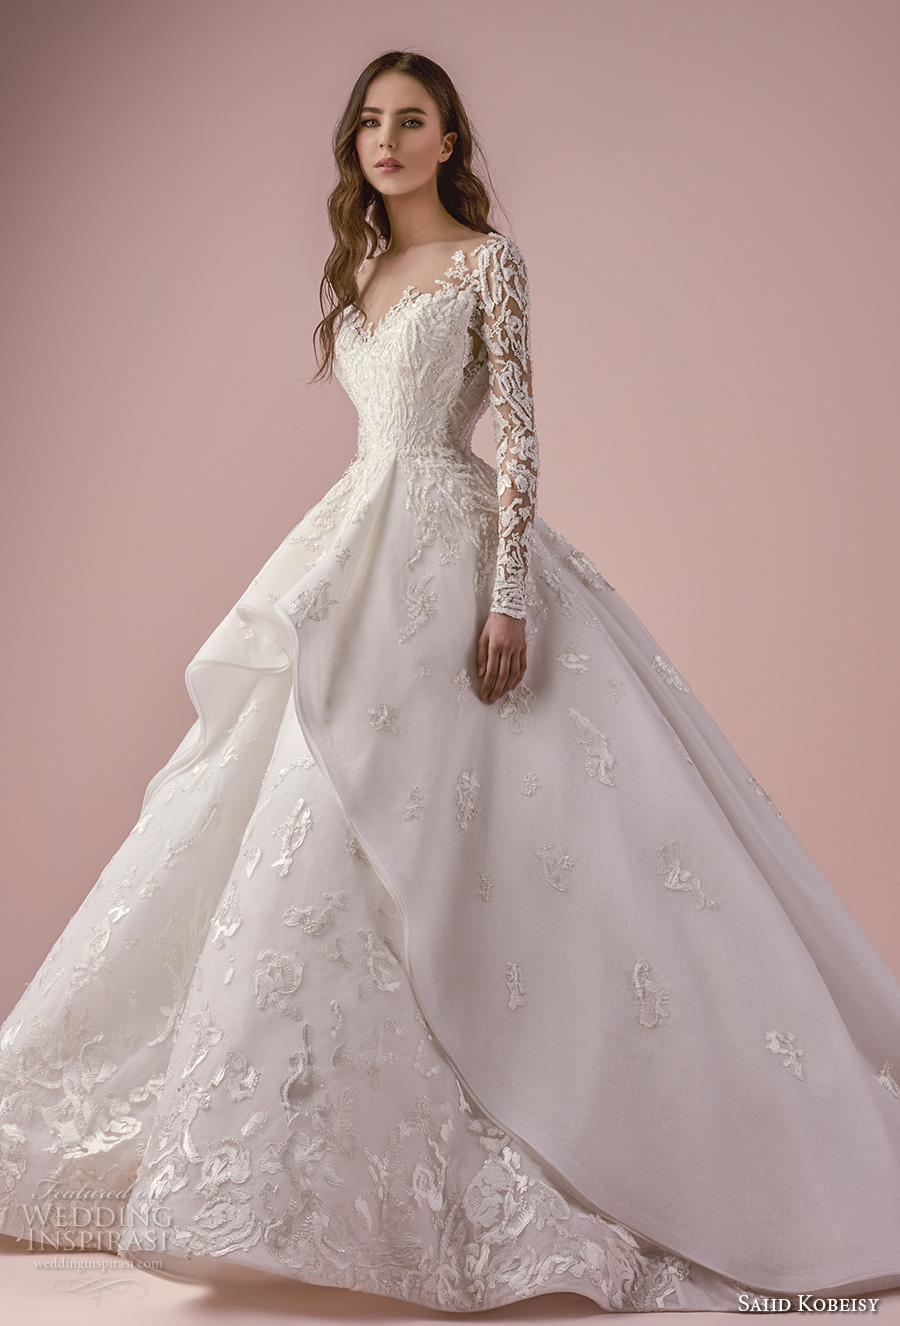 saiid kobeisy 2018 bridal long sleeves v neck heavily embellished bodice romantic princess layered skirt ball gown wedding dress chapel train (3265) mv